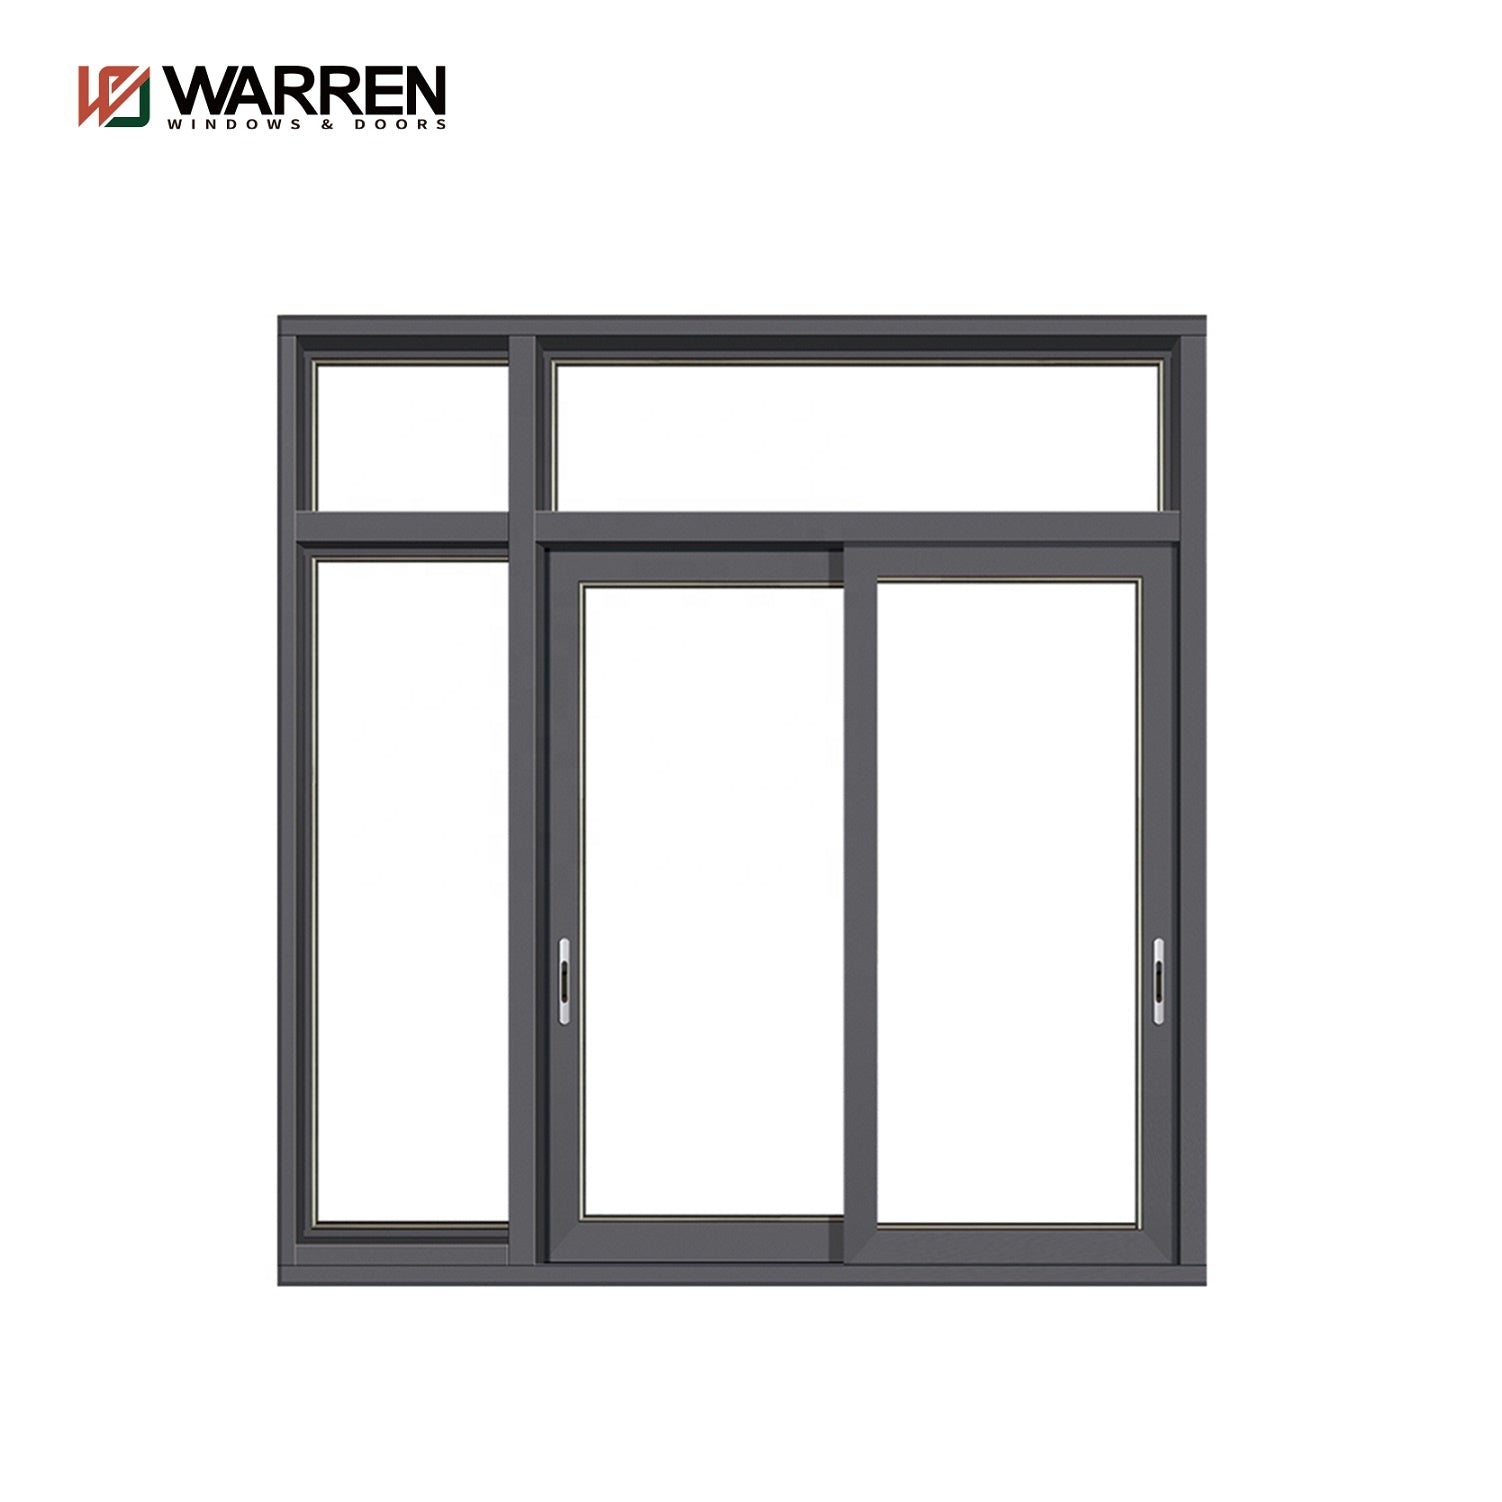 Warren Factory outlet aluminum sliding window frame exterior black patio garden large double glazed soundproof sliding window